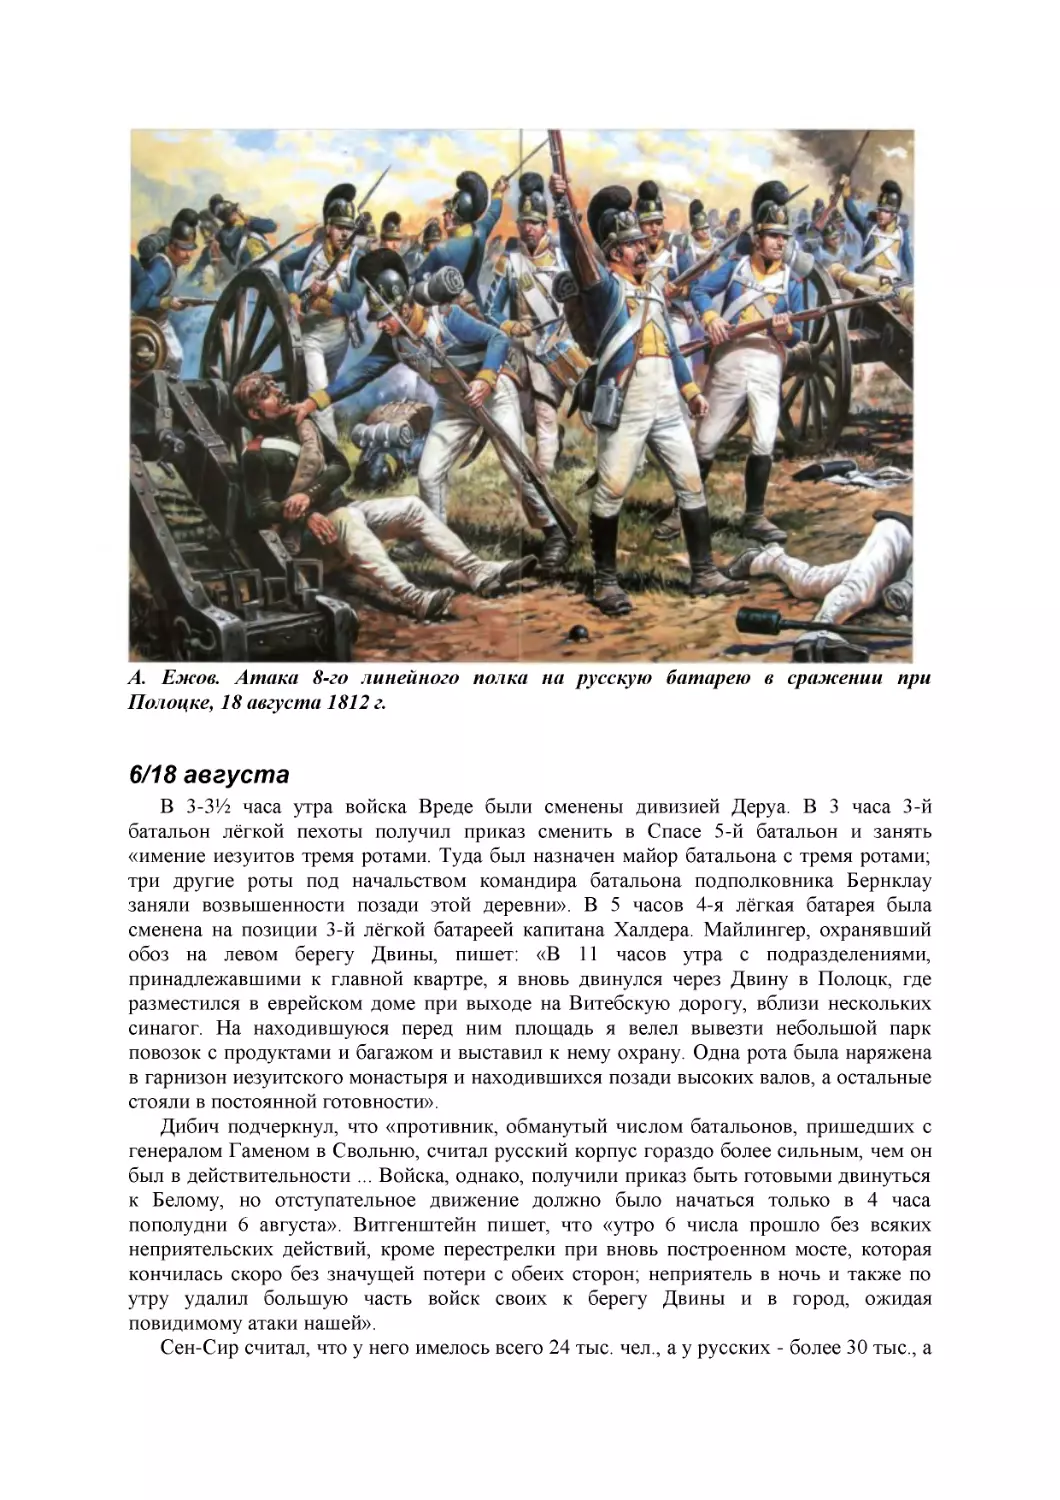 А. Ежов. Атака 8-го линейного полка на русскую батарею в сражении при Полоцке, 18 августа 1812 г.
6/18 августа